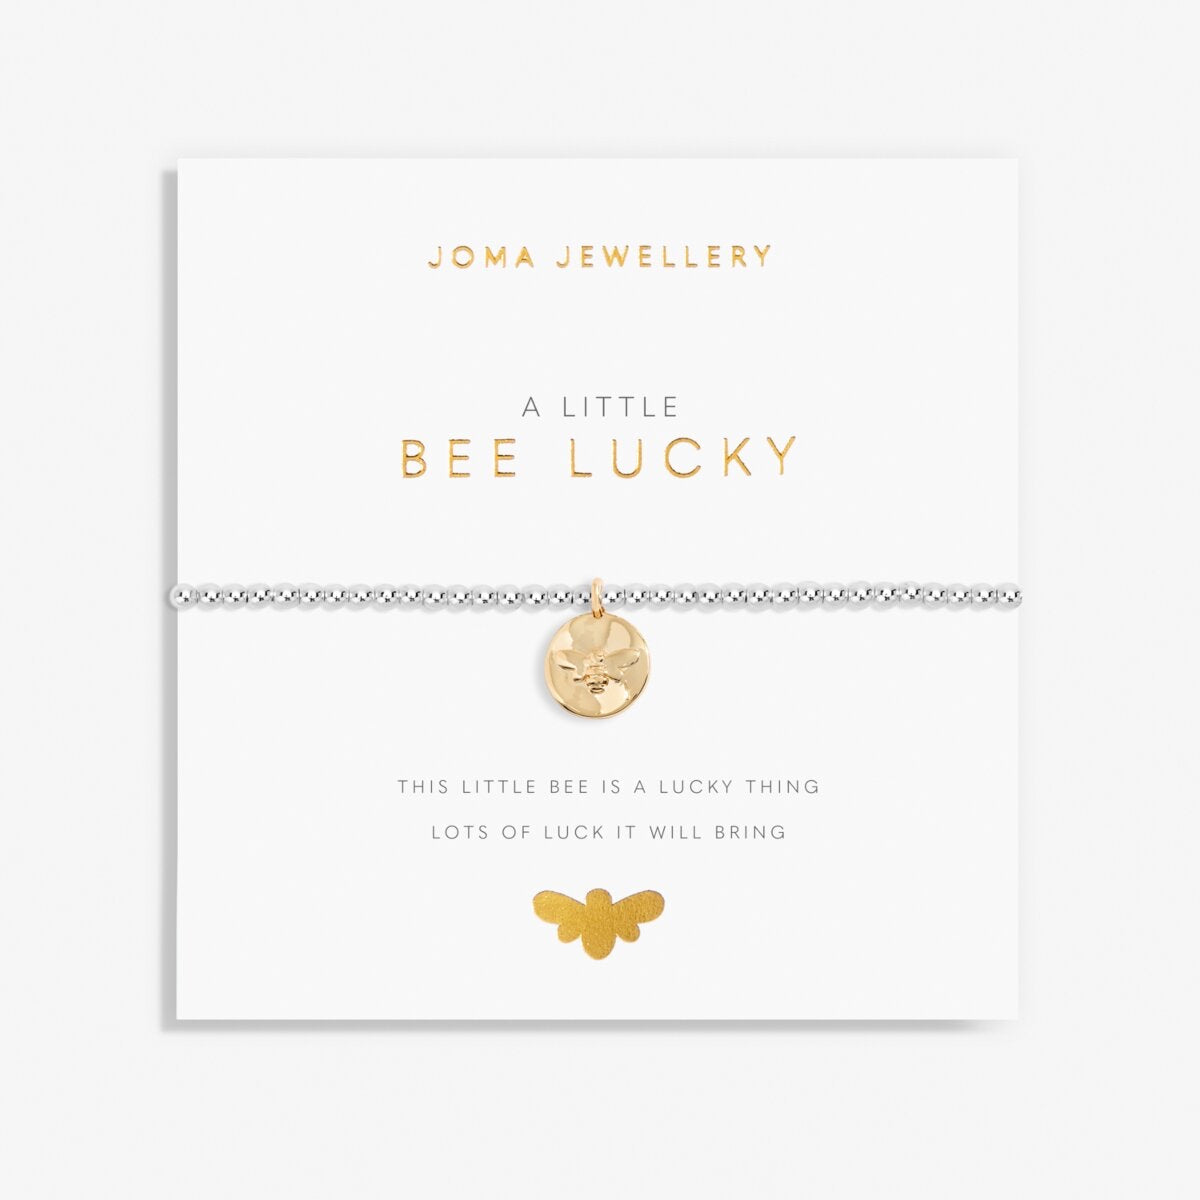 Joma Jewellery 'A Little' Bee Lucky